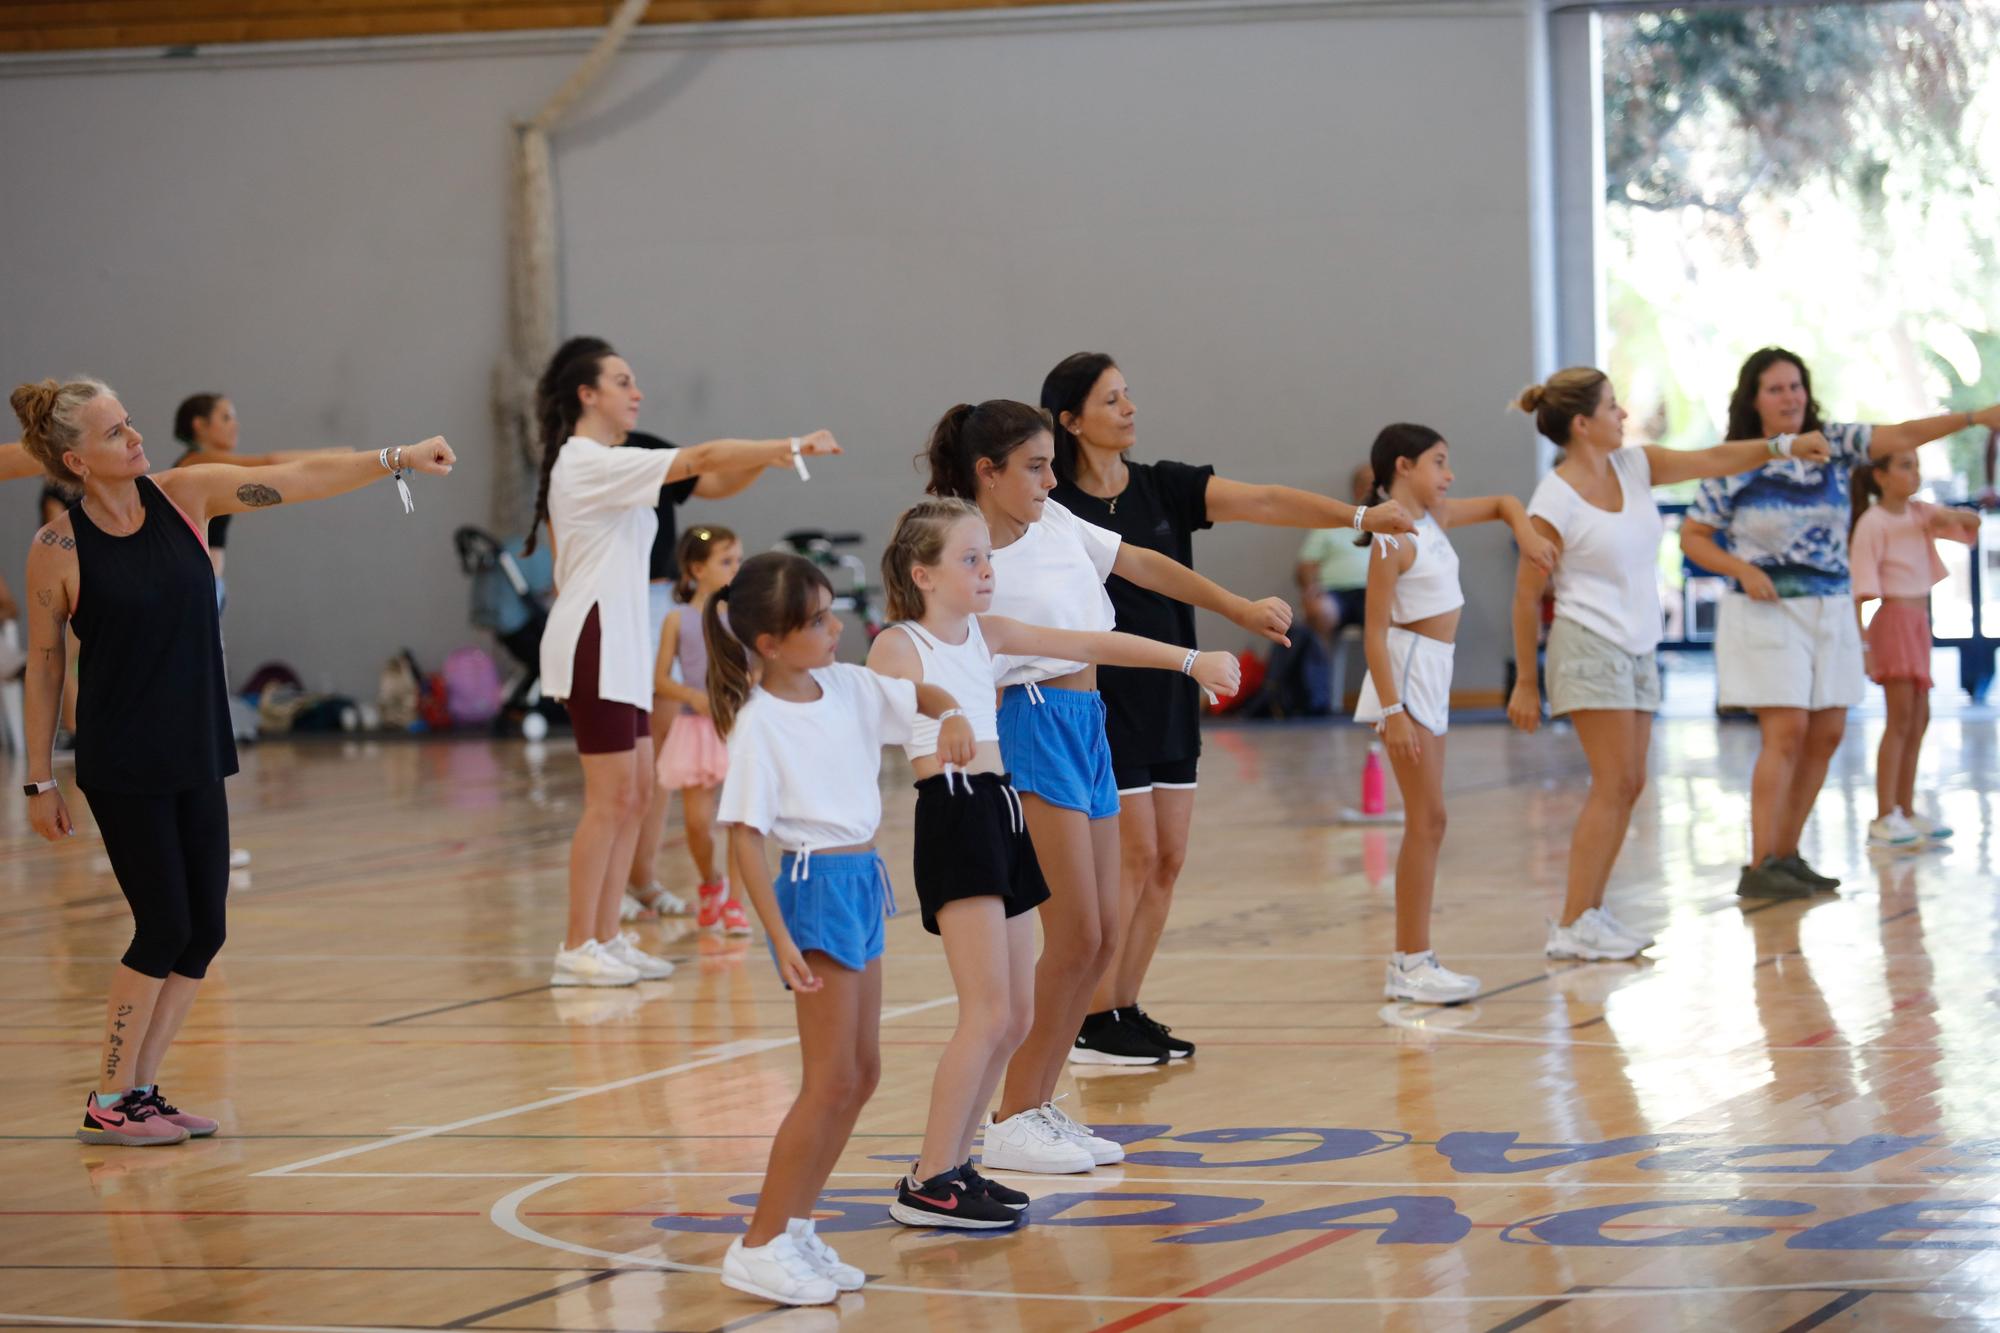 Mira aquí las fotos del taller de danza urbana de Sant Antoni